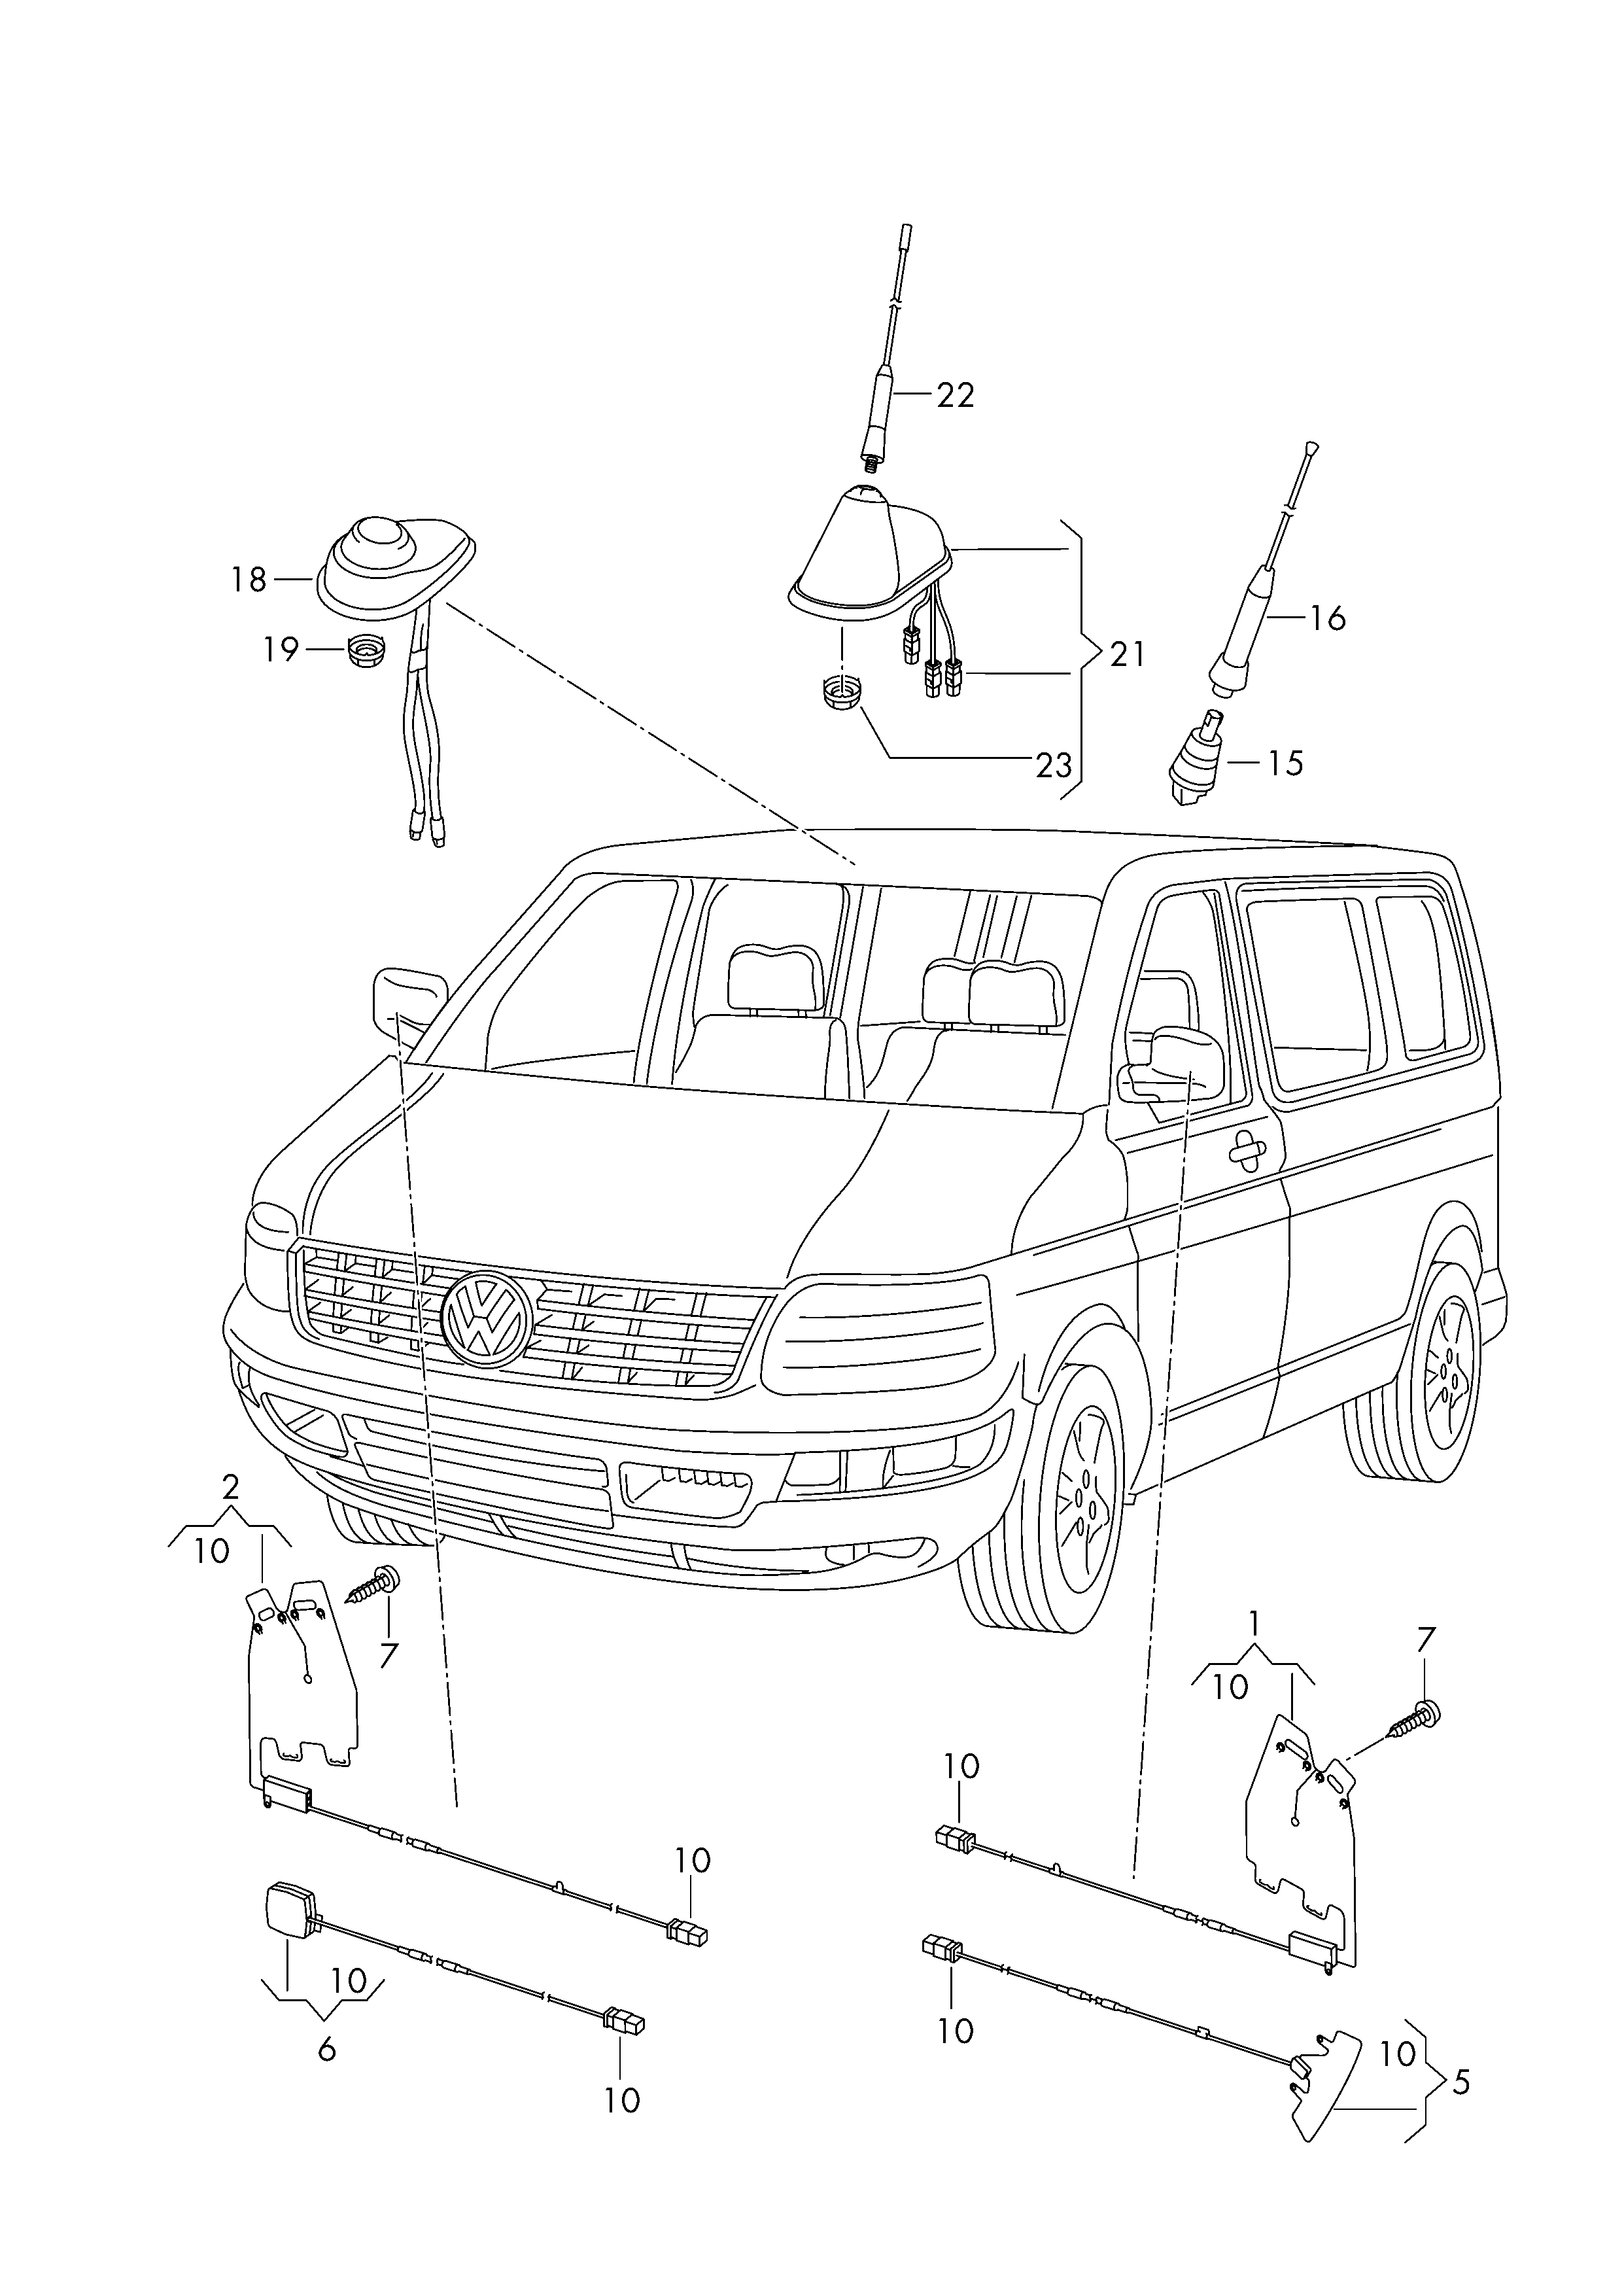 Modulo de antena  - Transporter - tr